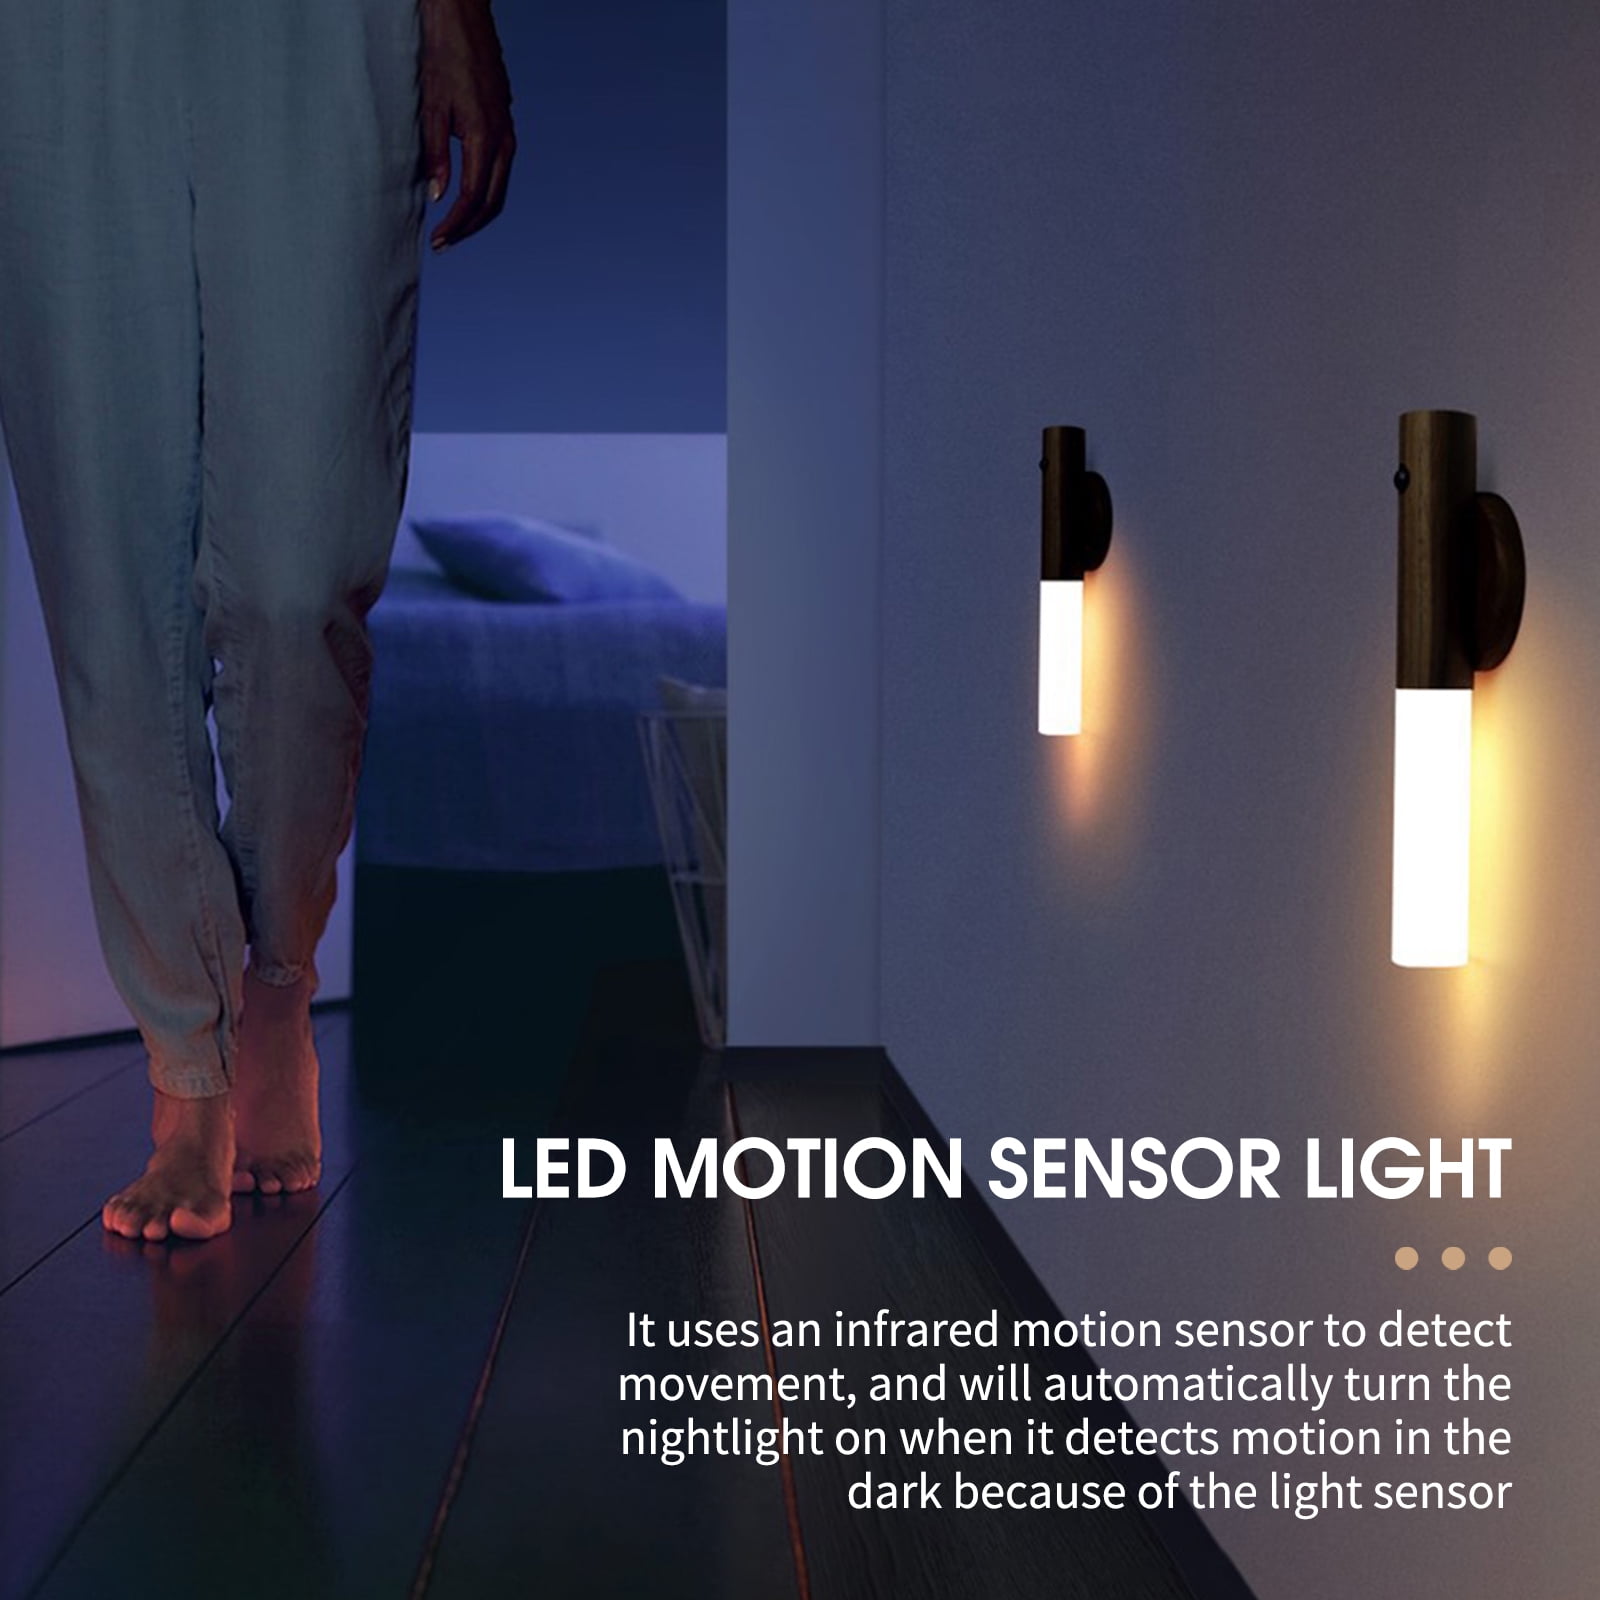 10800 - LED Auto Night Light with Motion Sensor Function